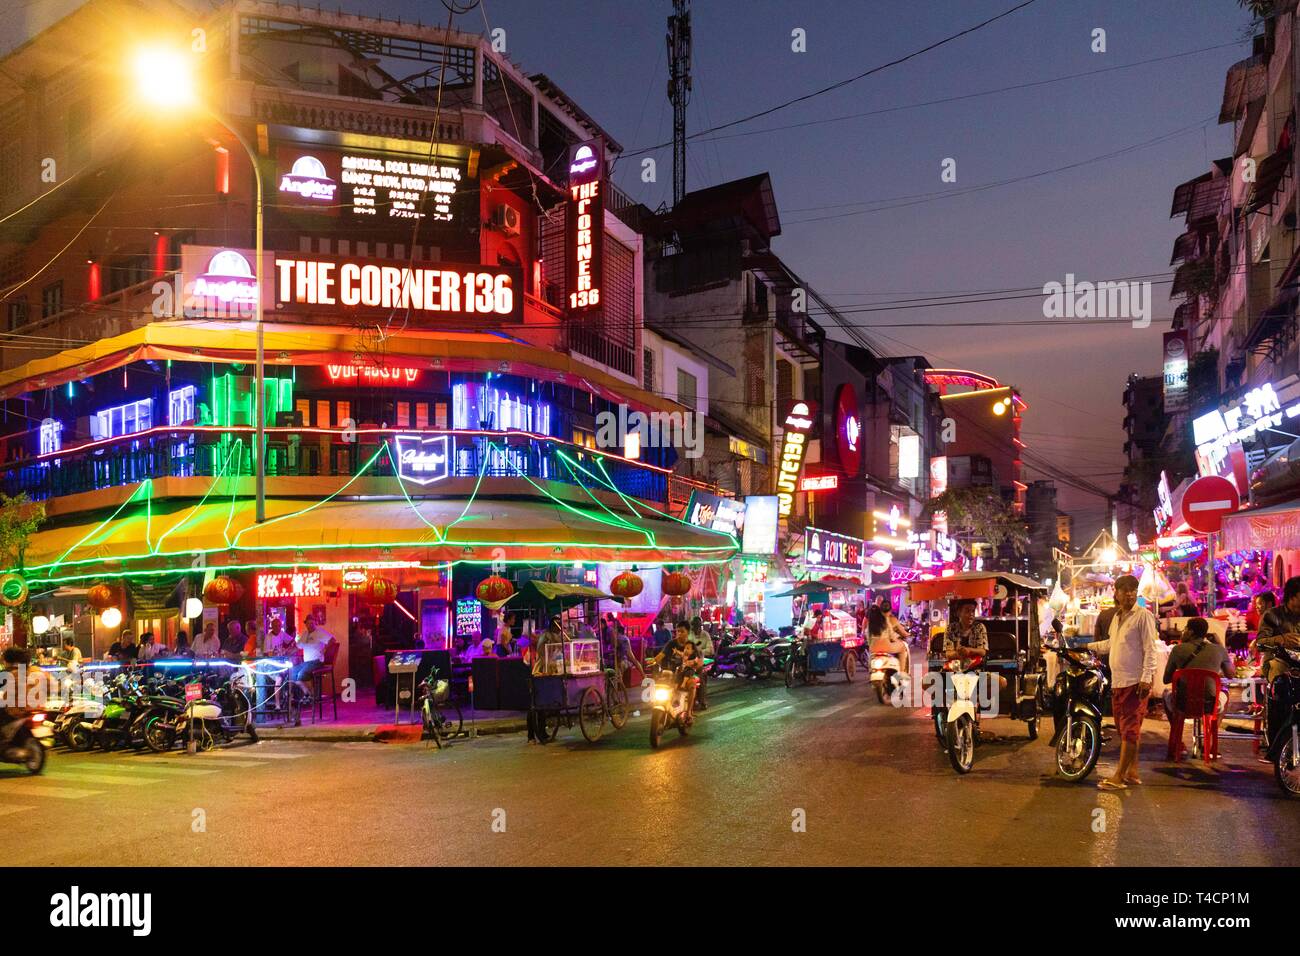 La vie de la rue, la vie nocturne, Le coin Bar, Discothèque 136, Phnom Penh, Cambodge Banque D'Images